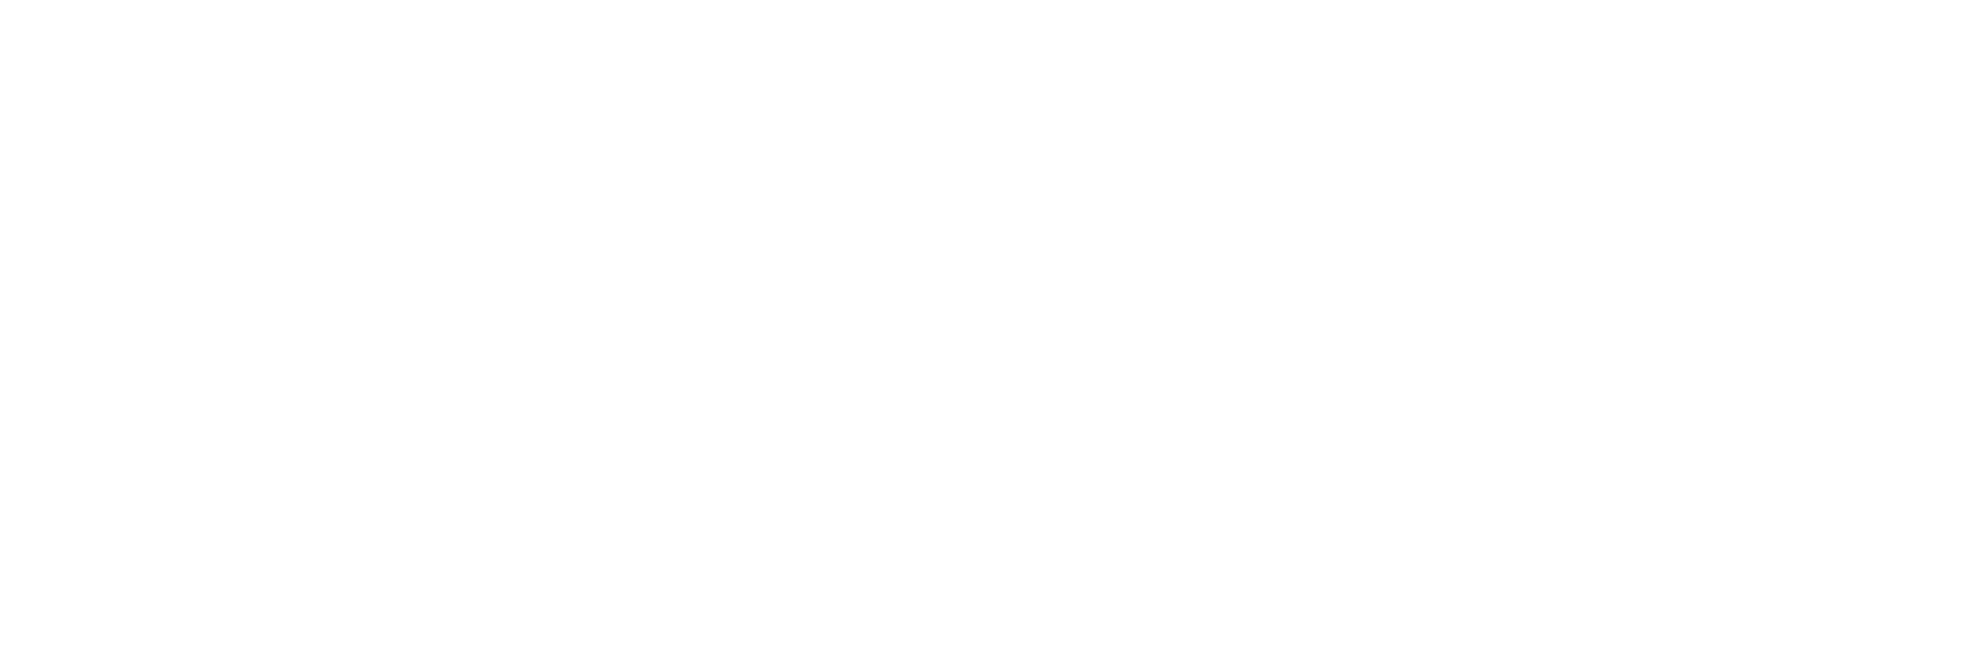 Stabil Stängsel logo vit